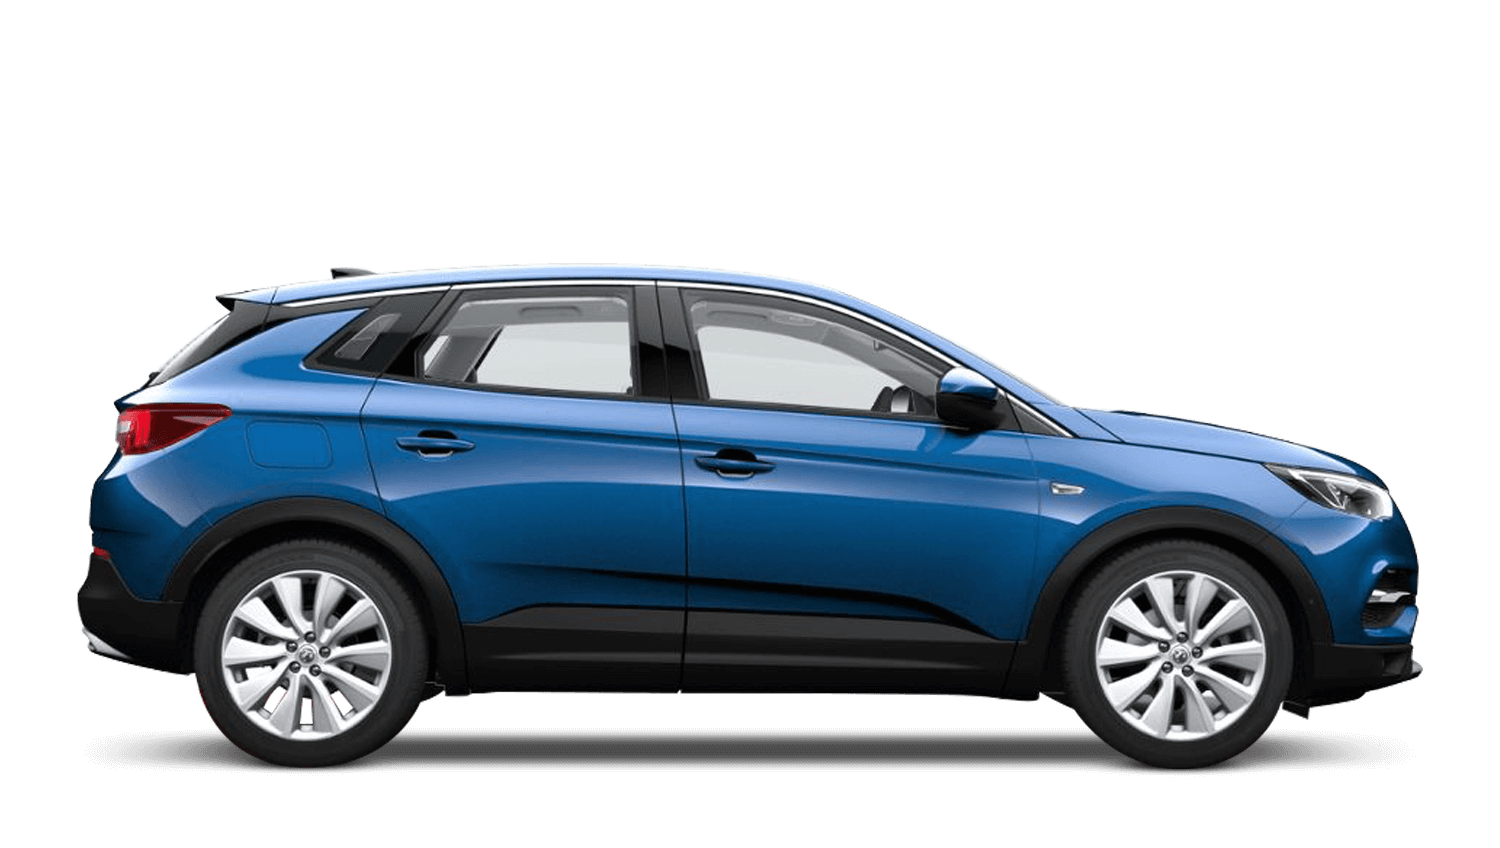 Afbeelding van T325TG, blauwe Opel Grandland 12xht mpv